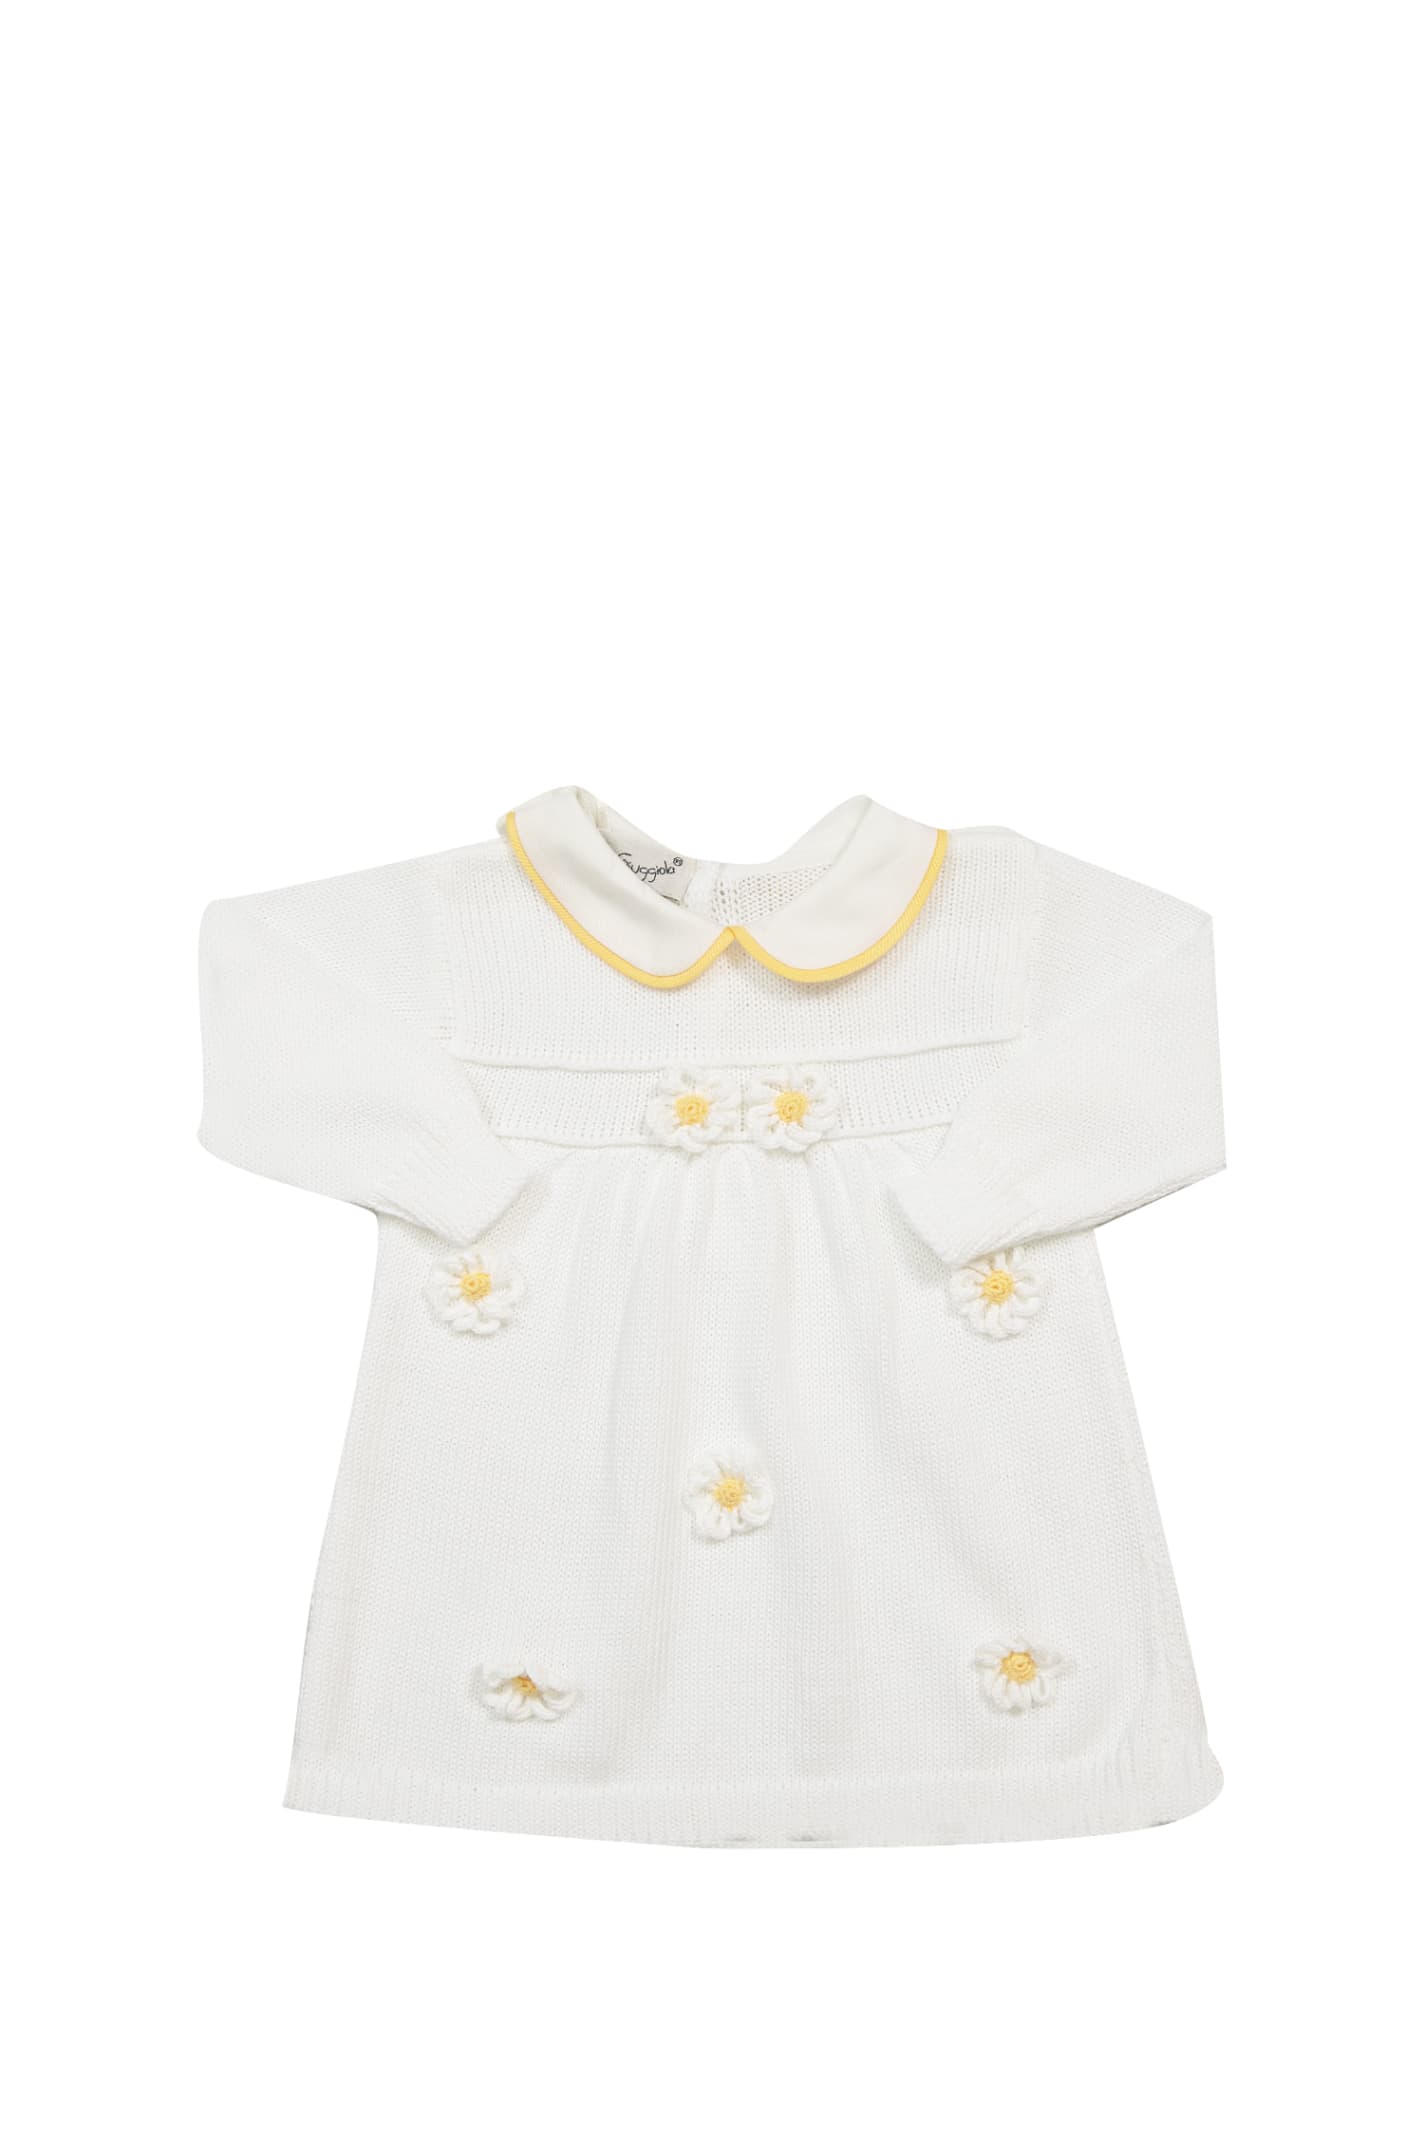 Piccola Giuggiola Babies' Cotton Knit Dress